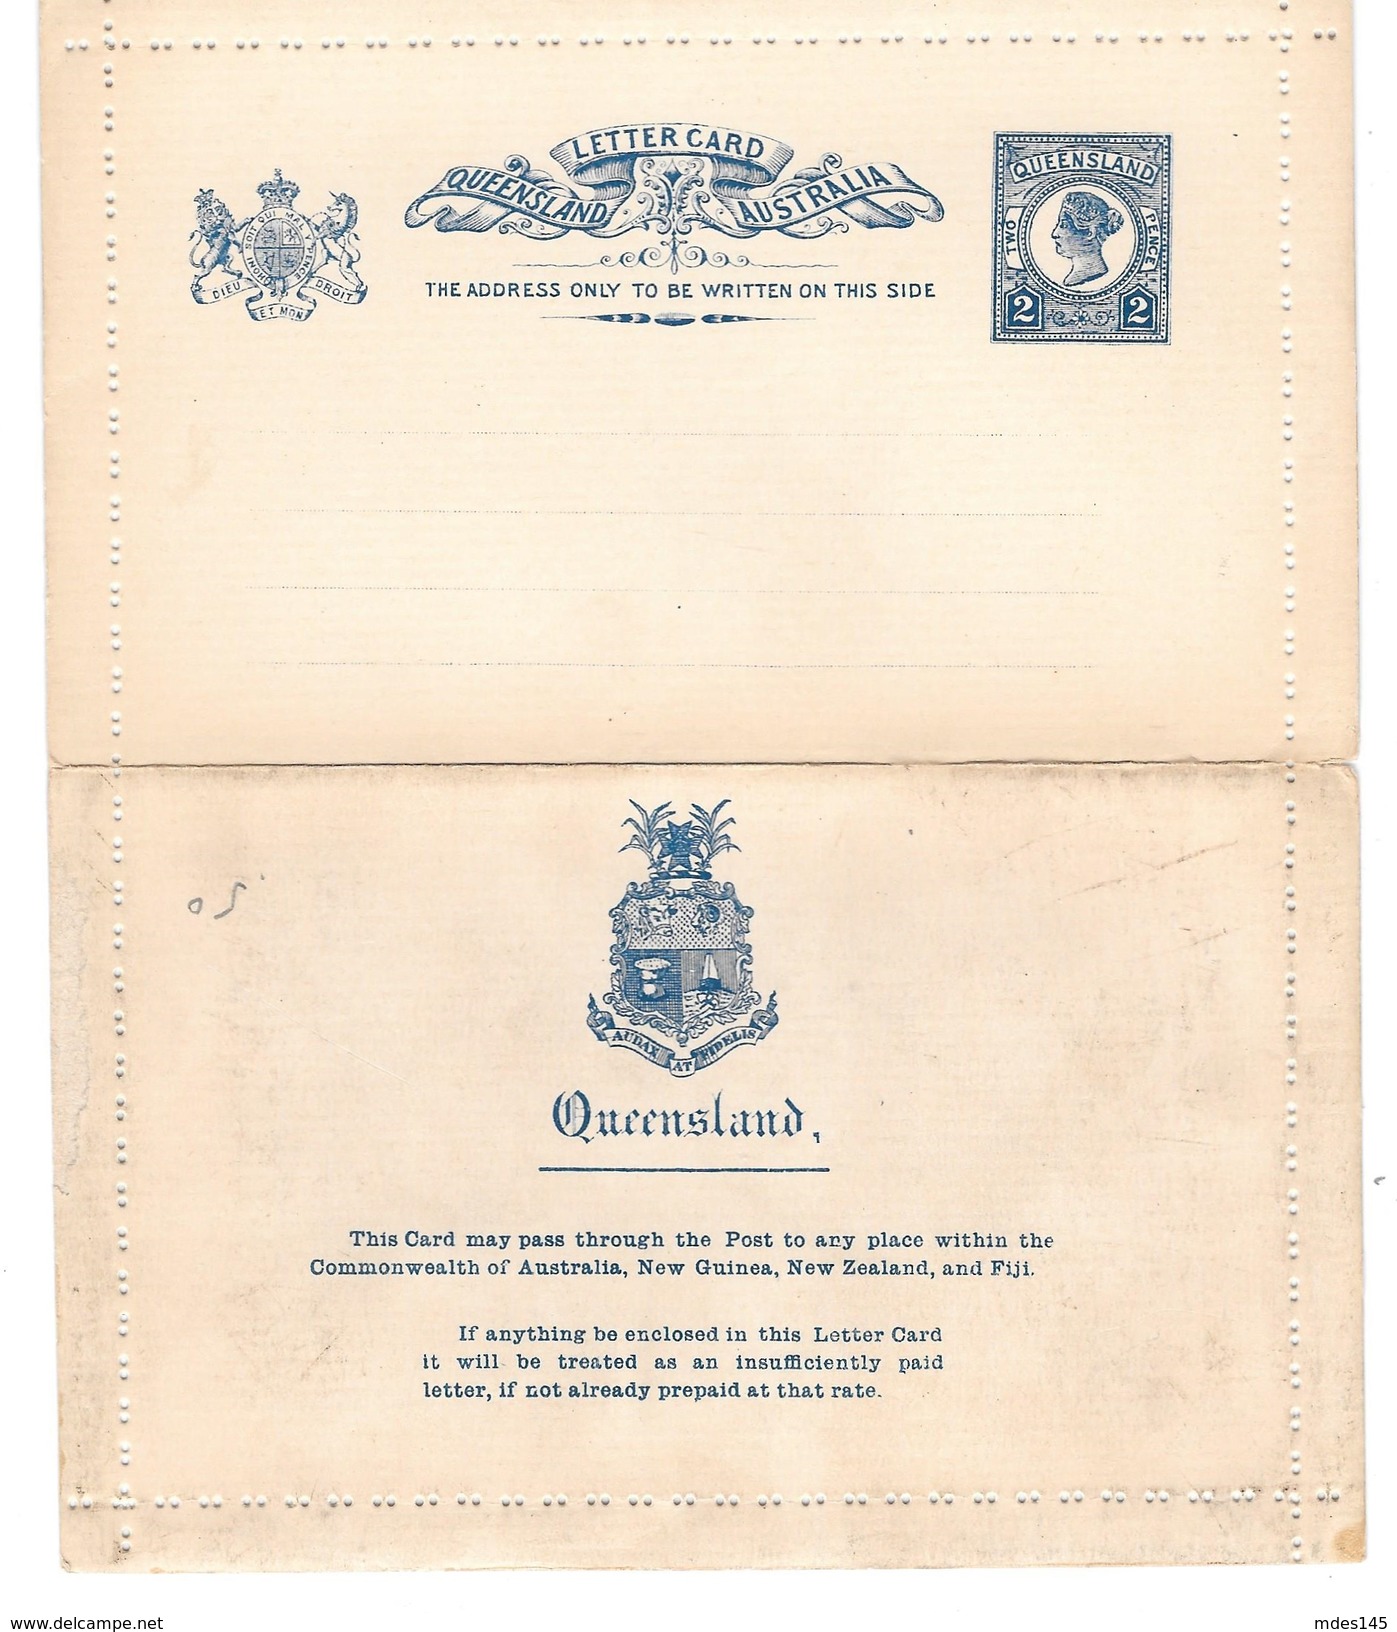 Queensland Australia Postal Stationery Lettercard 2p Victoria Blue Unused Folded - Postal Stationery